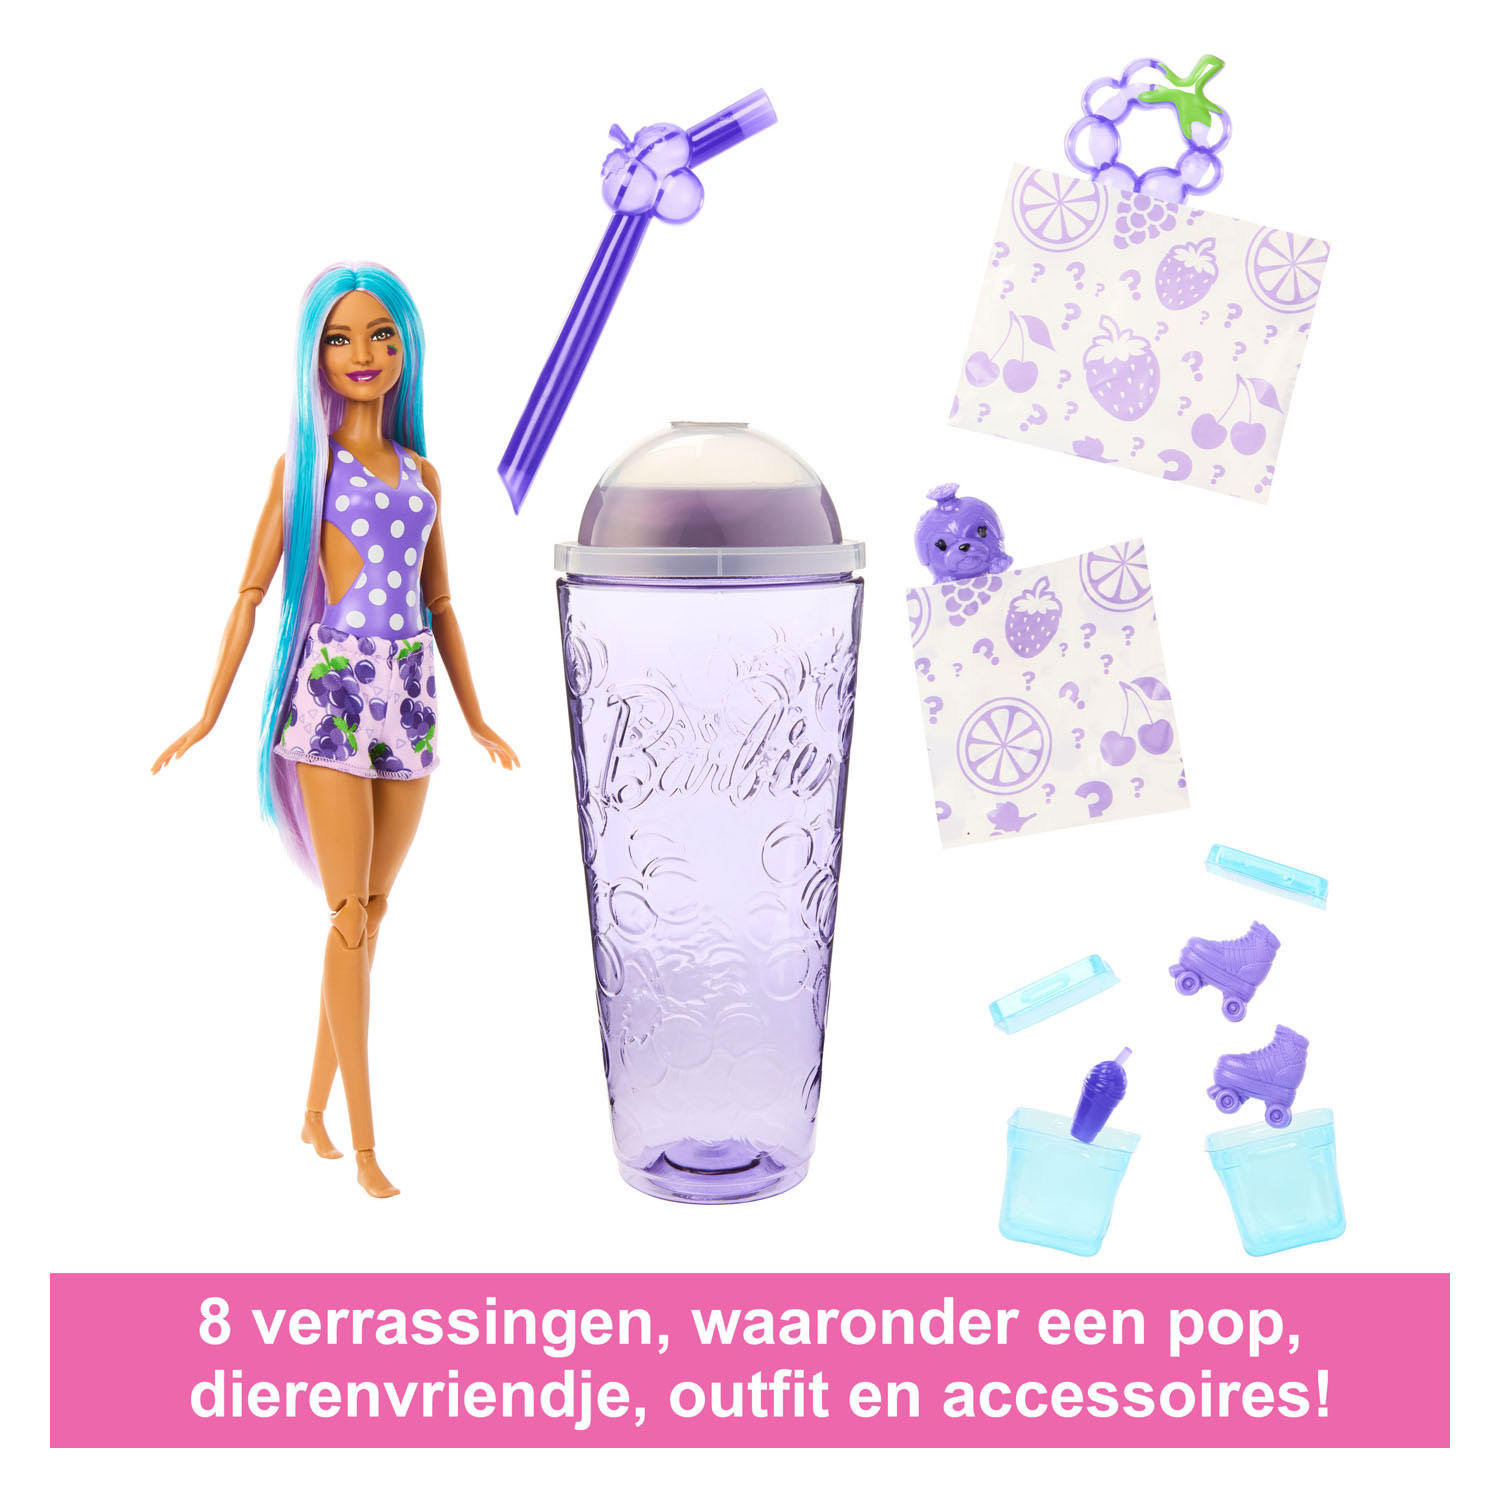 Barbie Reveal Pop Juicy Fruits Series - Grape Fizz